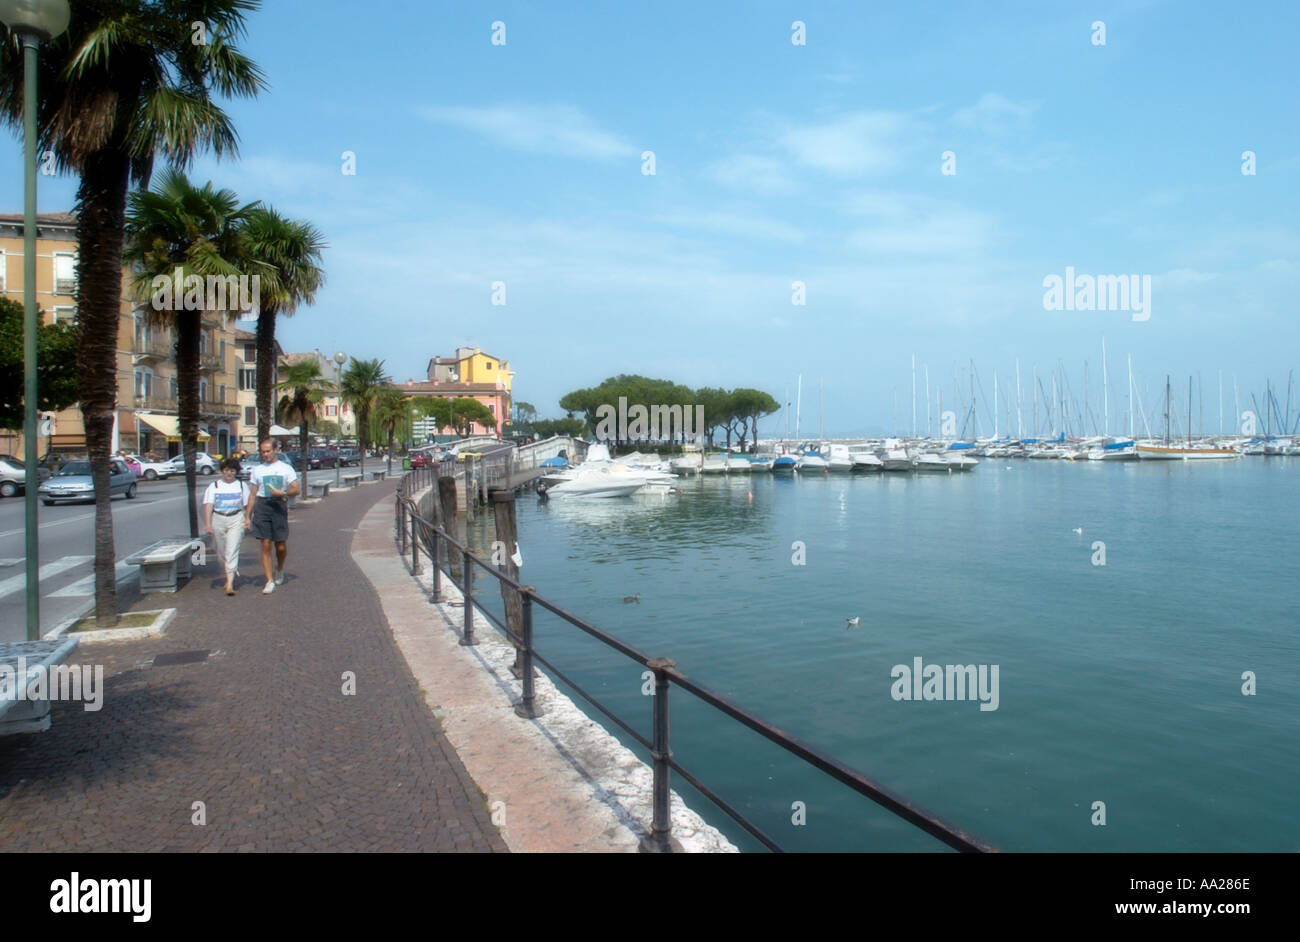 Soft focus shot of the lakefront promenade and harbour, Desenzano, Lake Garda, Italy Stock Photo